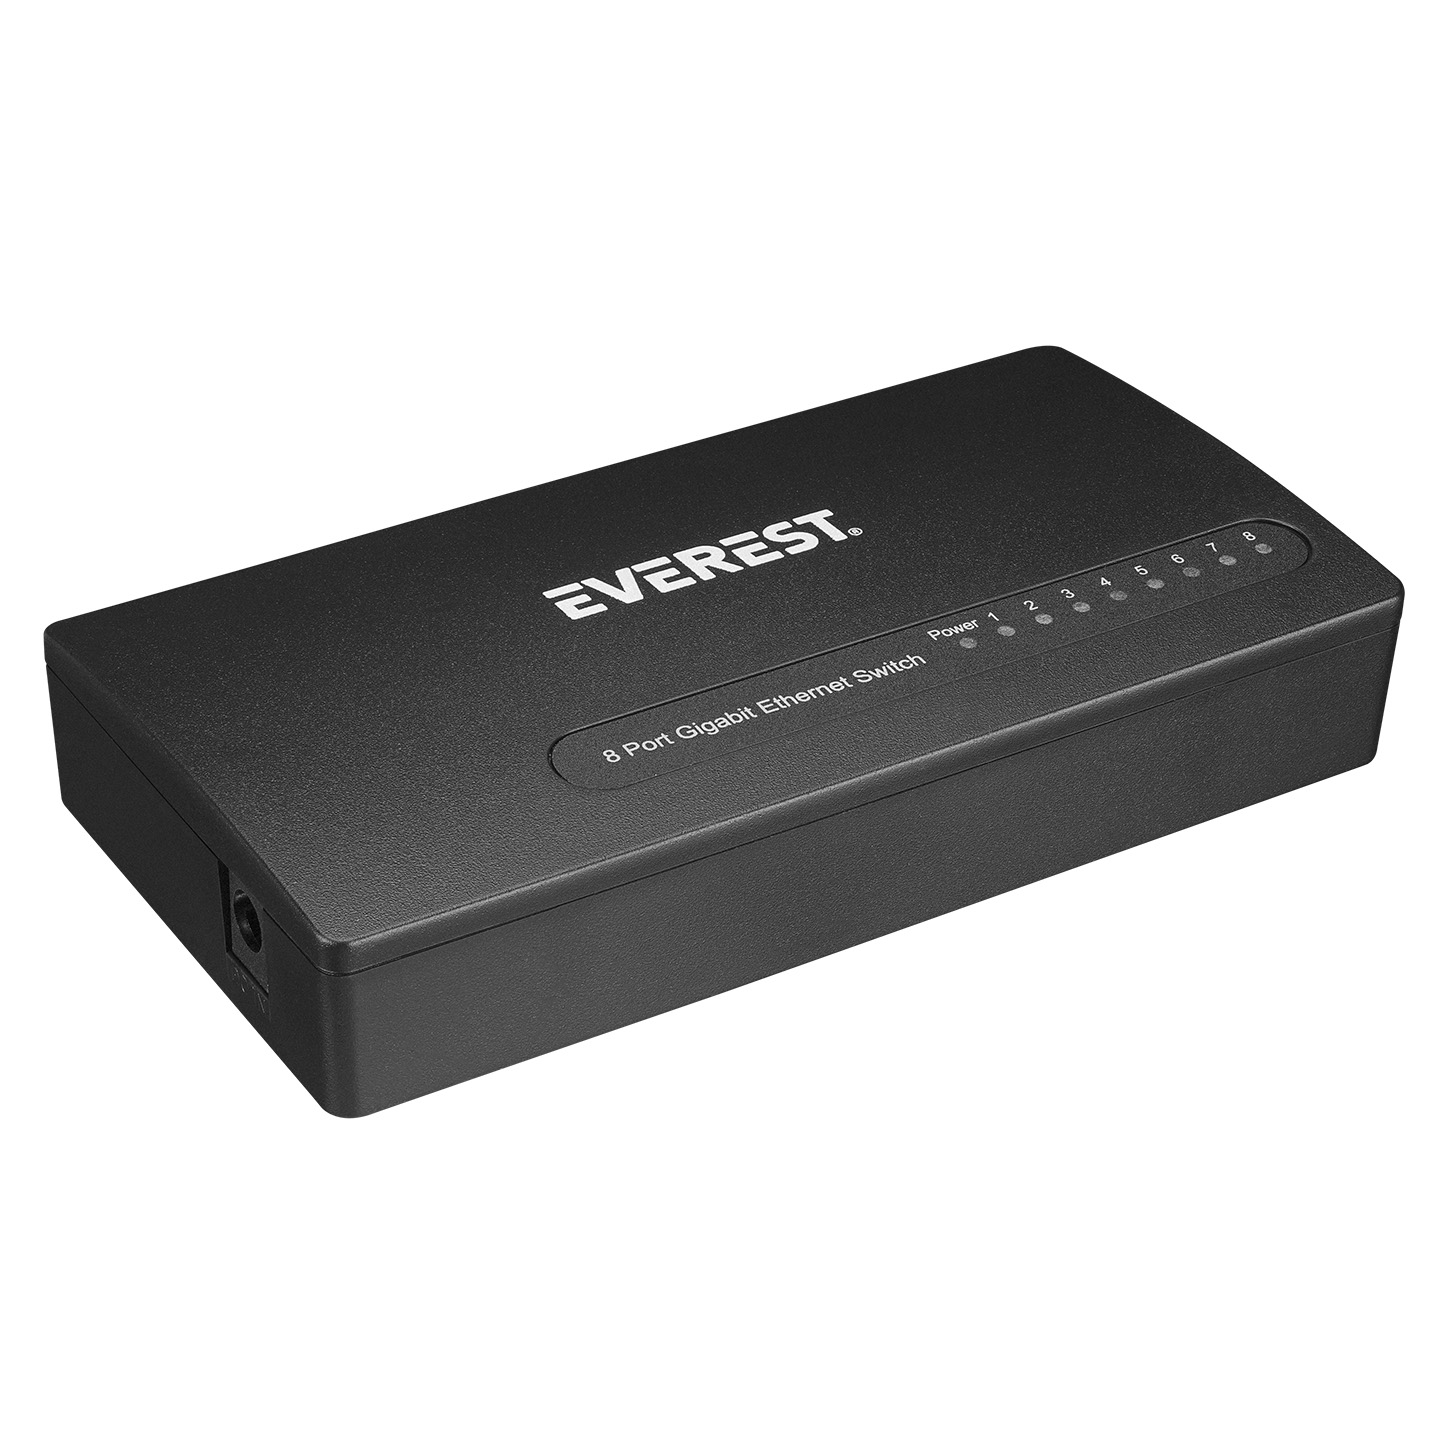 Everest ESW-808 8 Port 1000Mbps RTL8370N Gigabit Ethernet Switch Hub